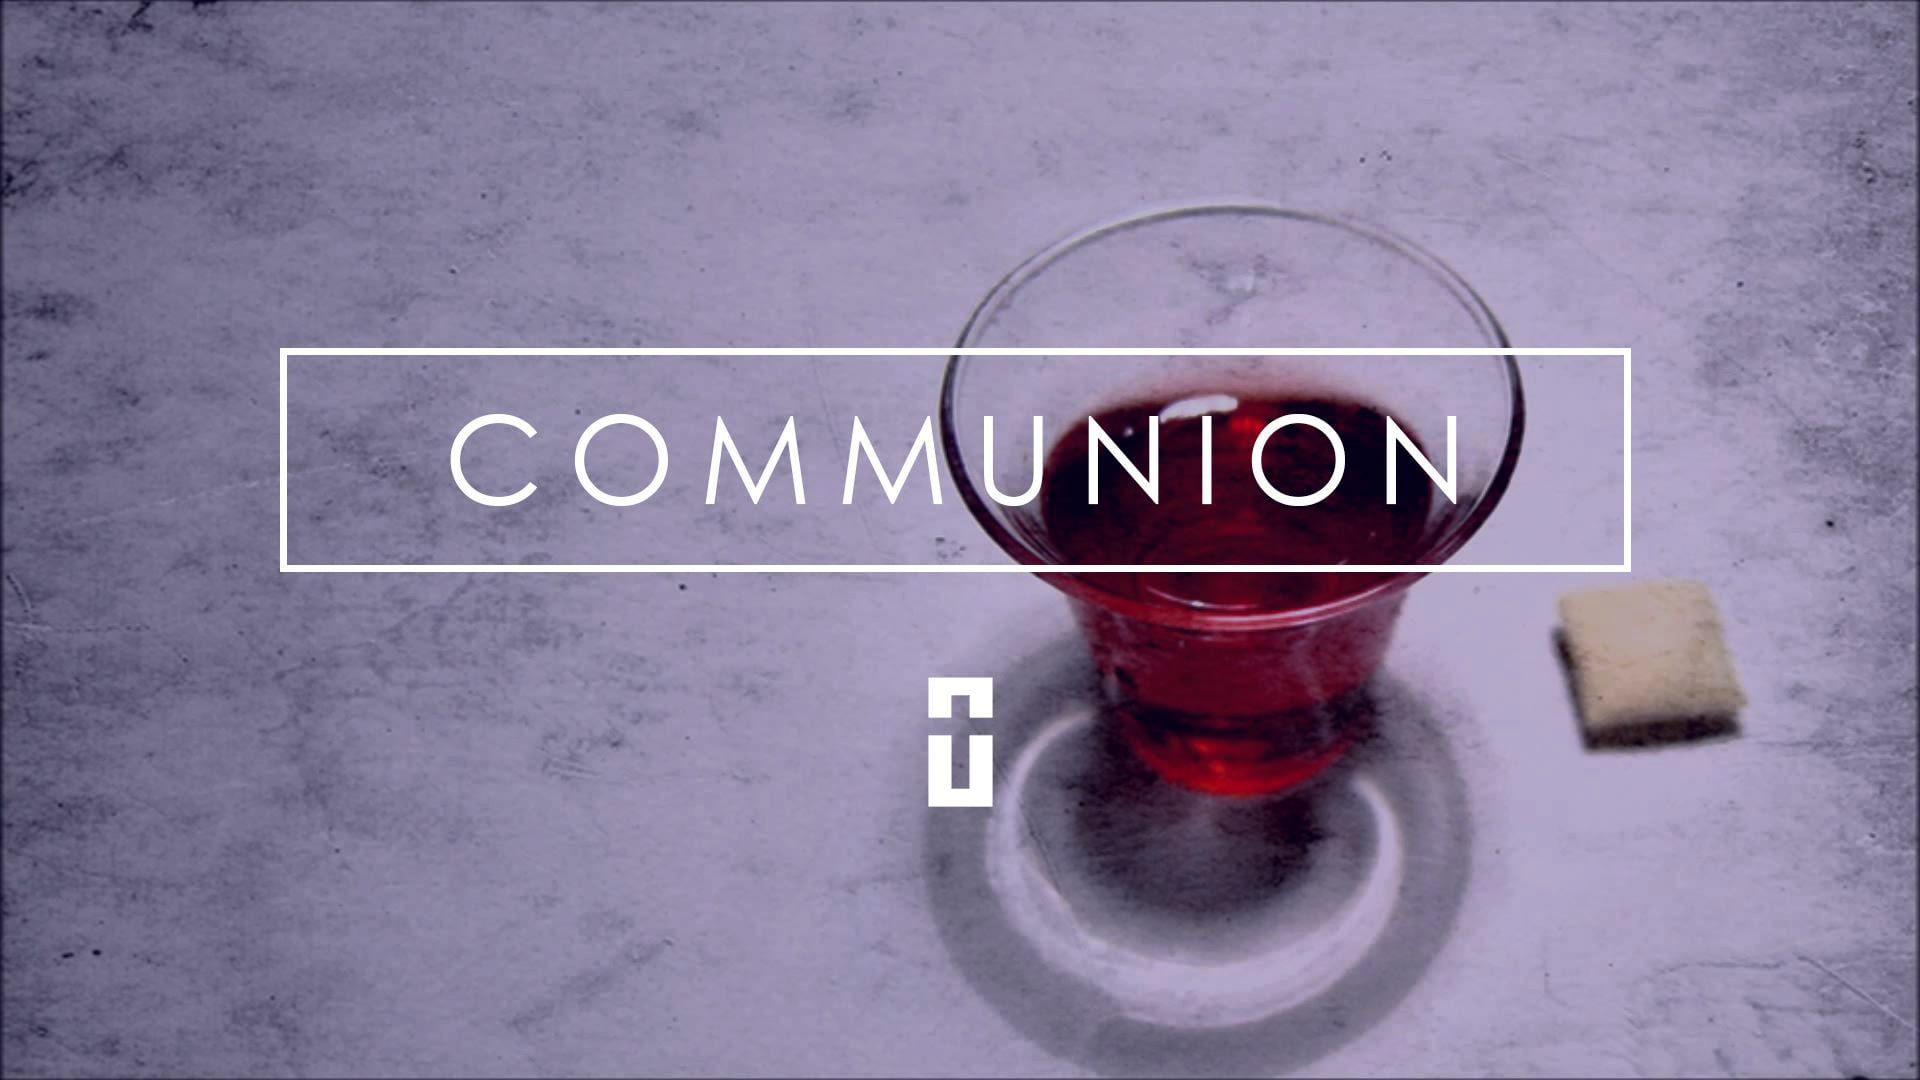 Communion with elder Paul Schilling 05-01-20